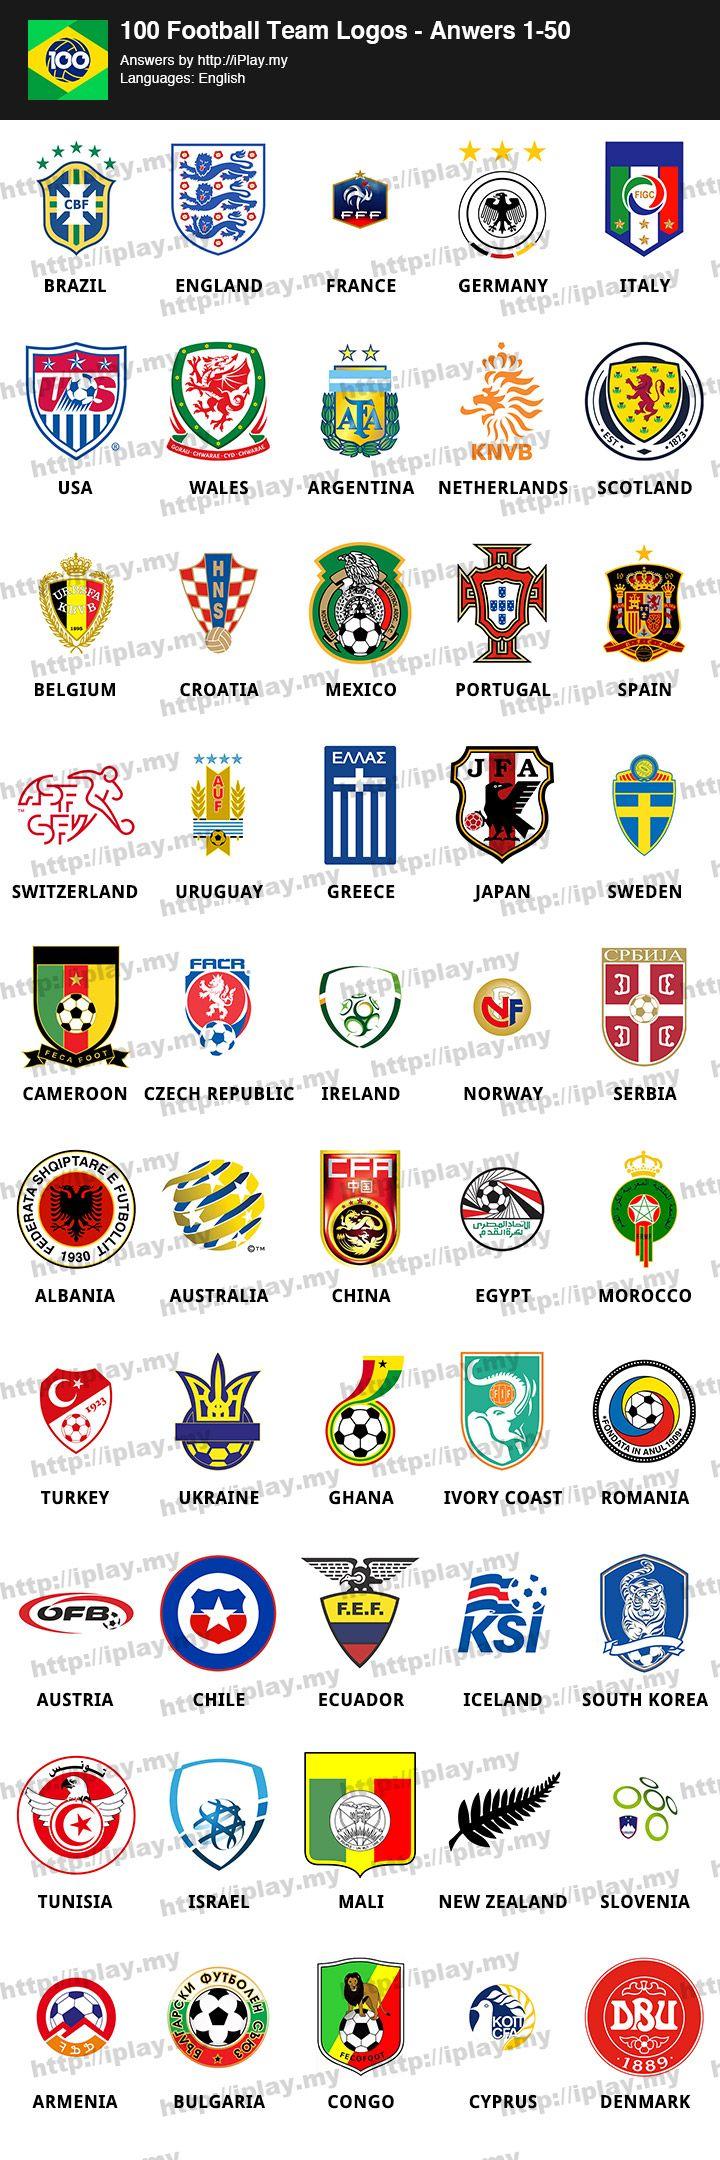 100 Pics Answers Logo - 100 Football Team Logos Answers | iPlay.my